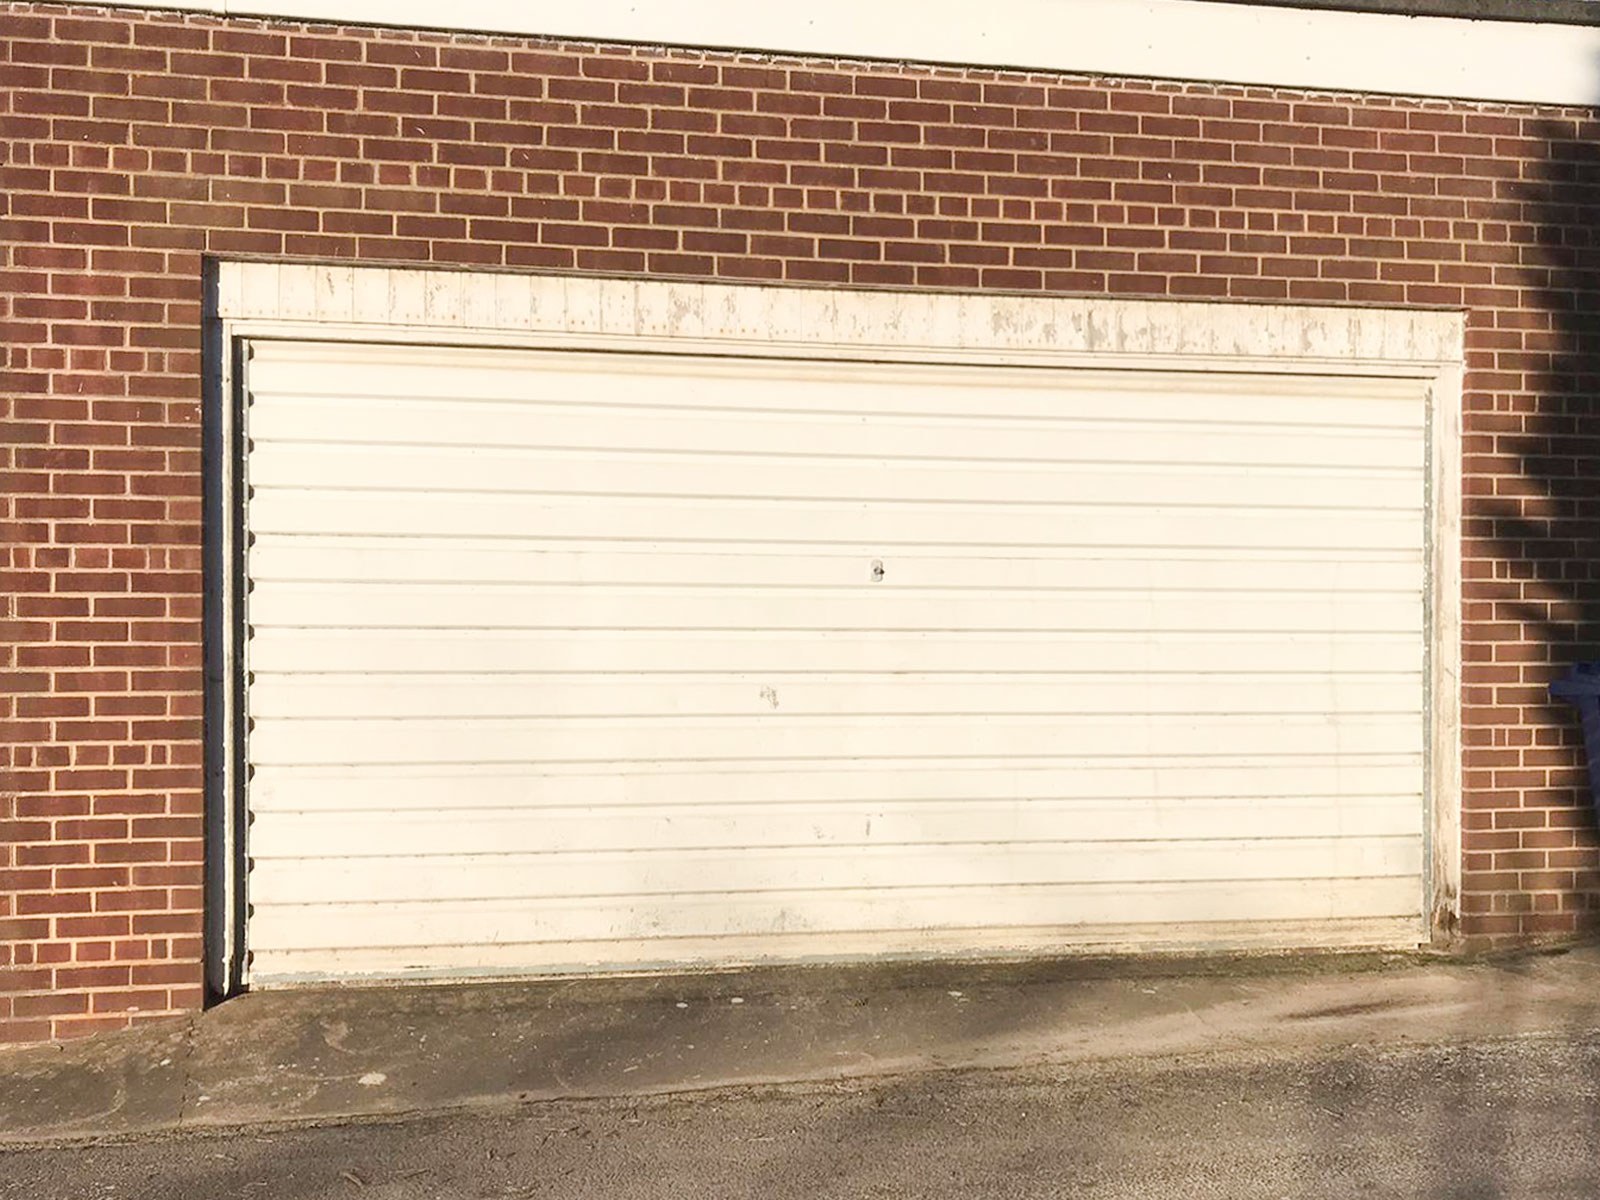 Chartwell Green Insulated Roller Garage Door, Bolton